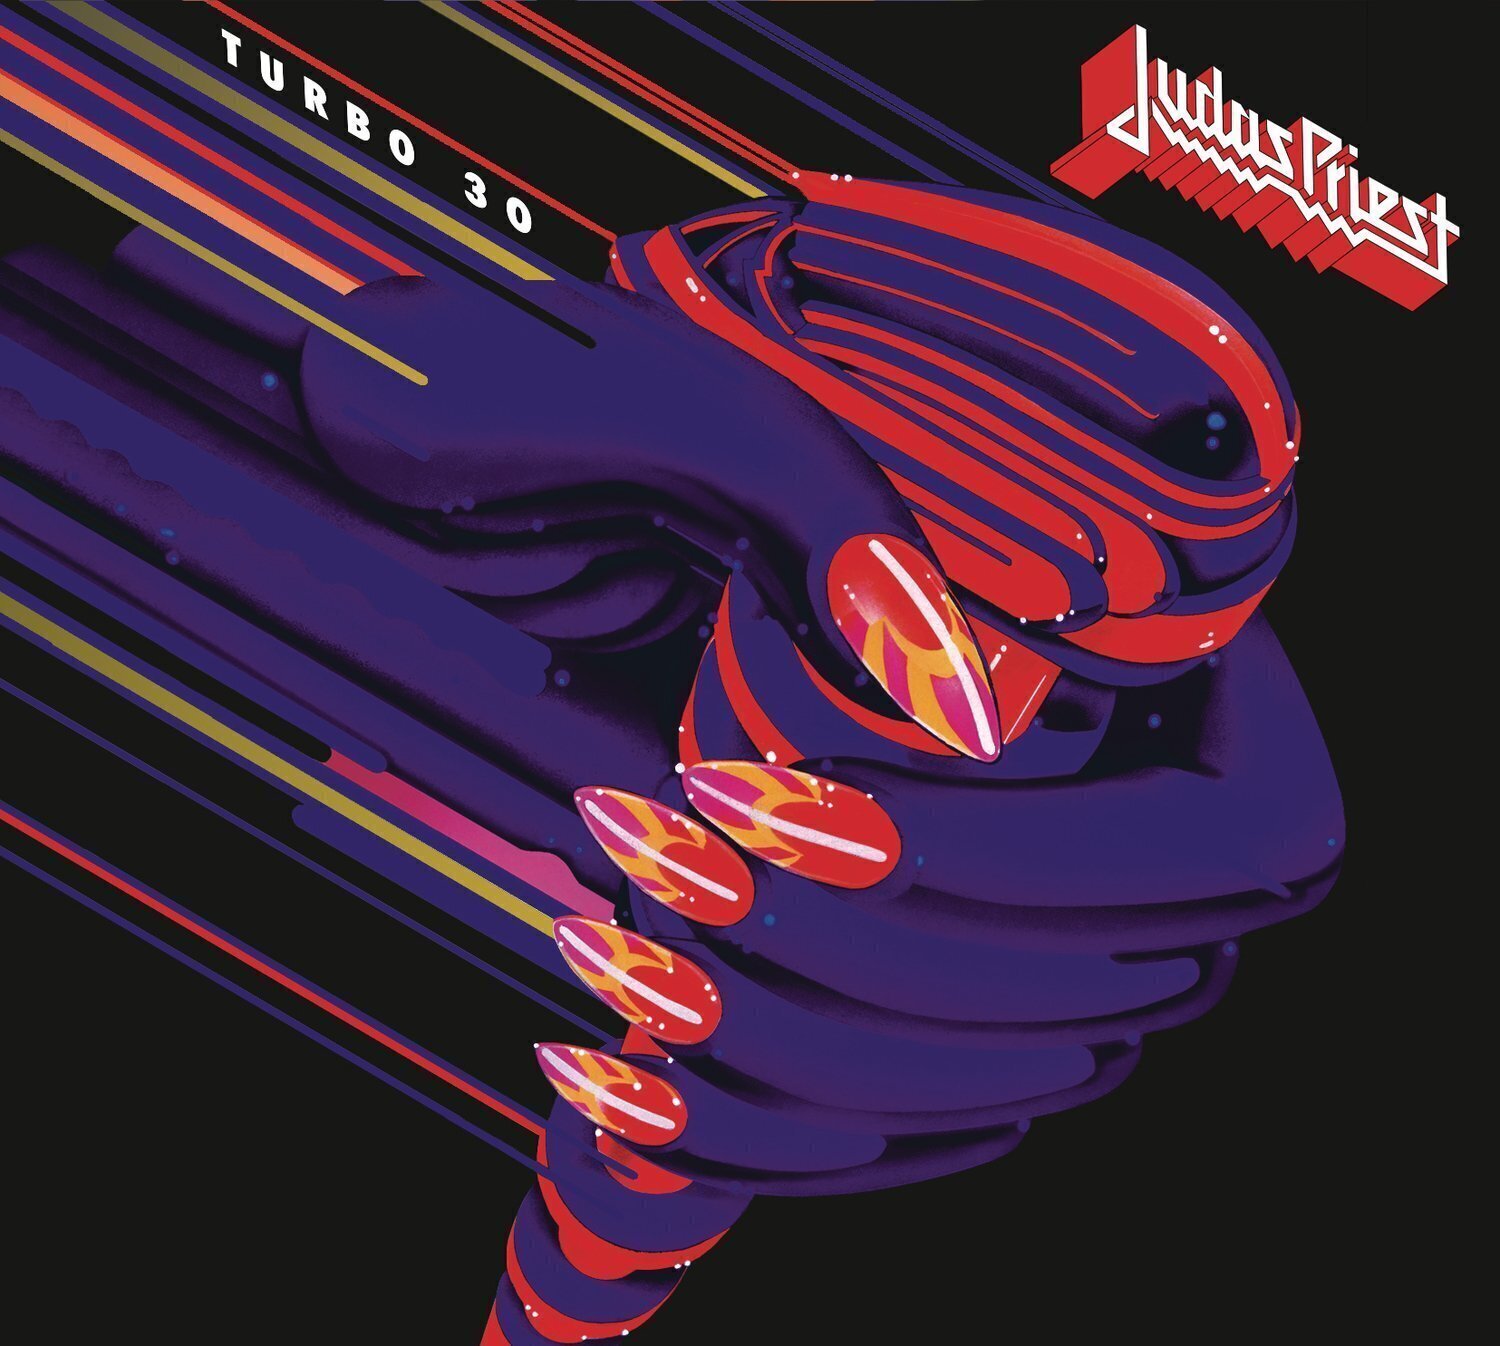 CD de música Judas Priest - Turbo 30 (Anniversary Edition) (Remastered) (3 CD)